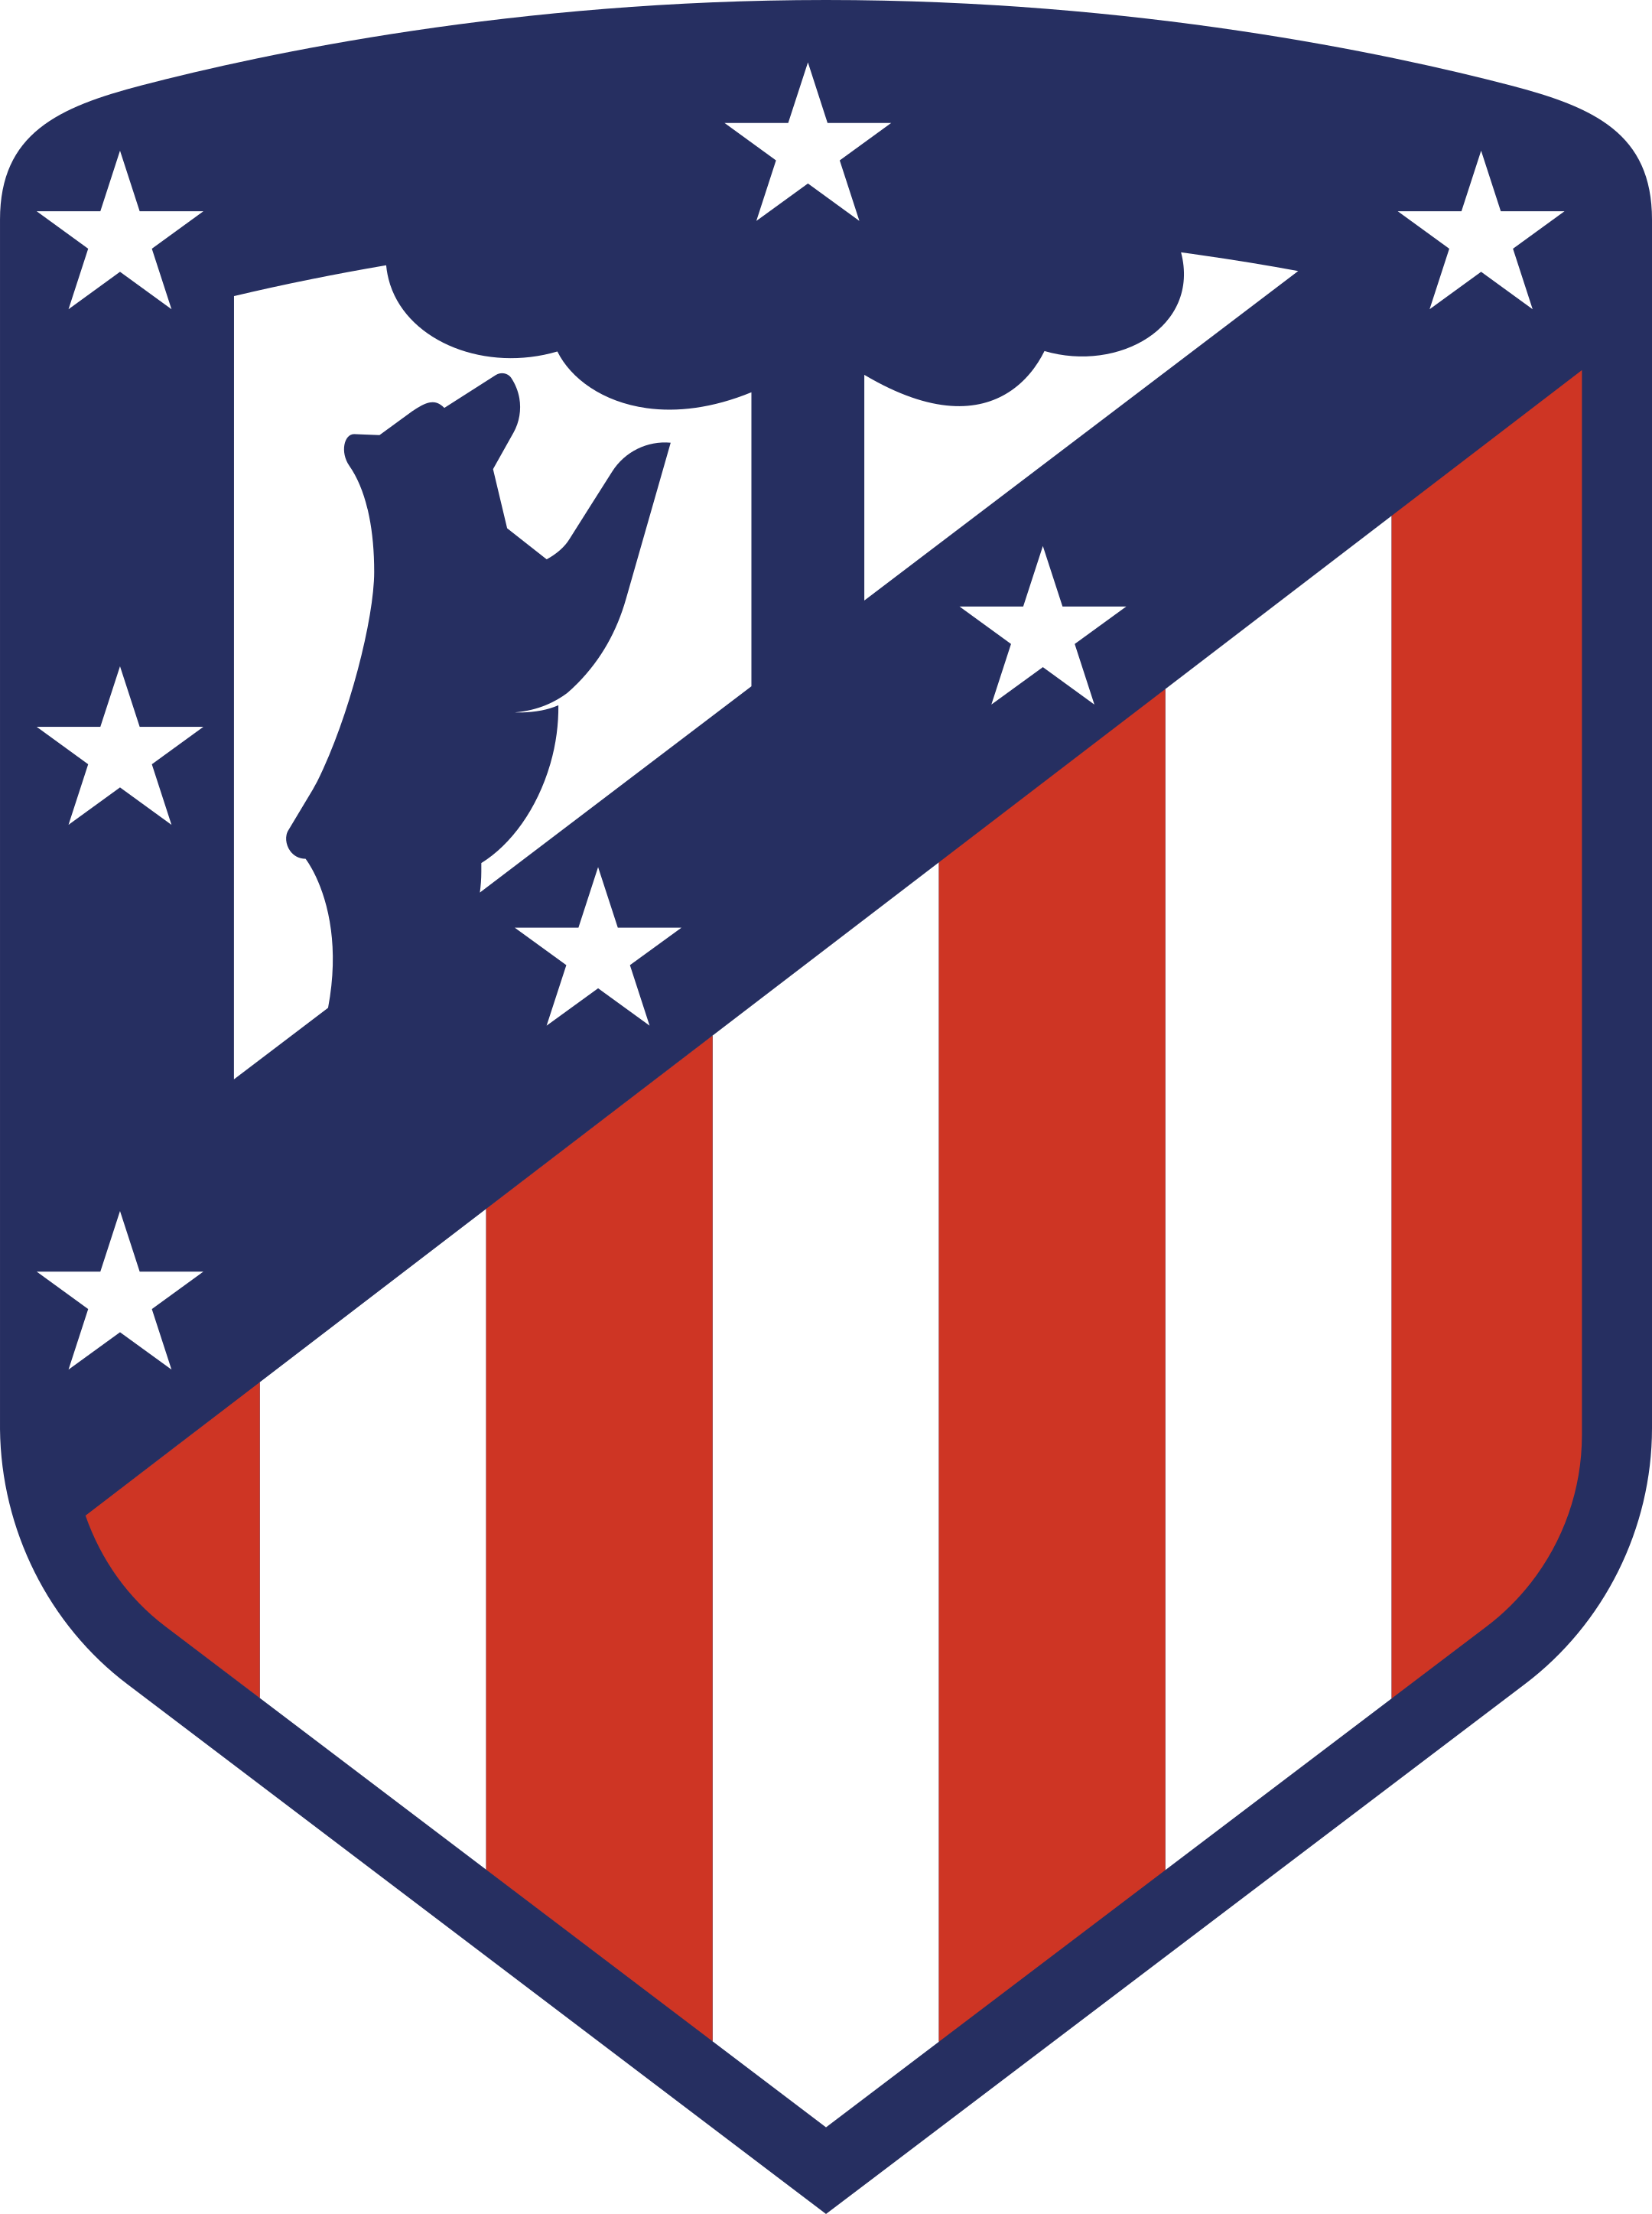 atletico madrid logo 1 1 - Club Atlético Madrid Logo